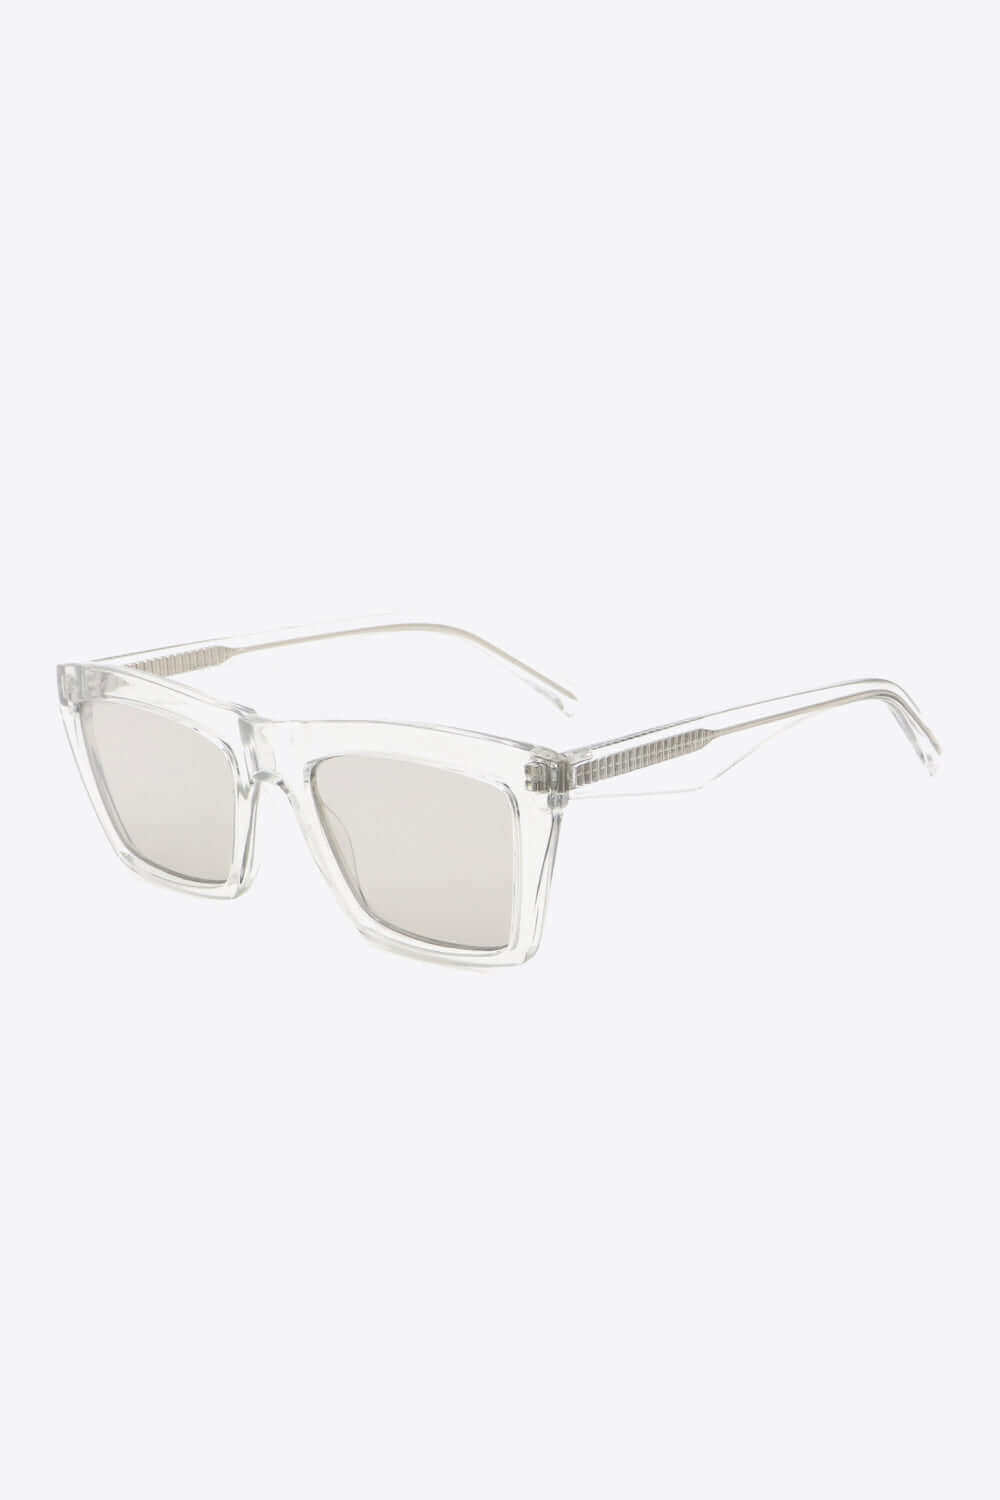 Cellulose Propionate Frame Rectangle Sunglasses - Samslivos